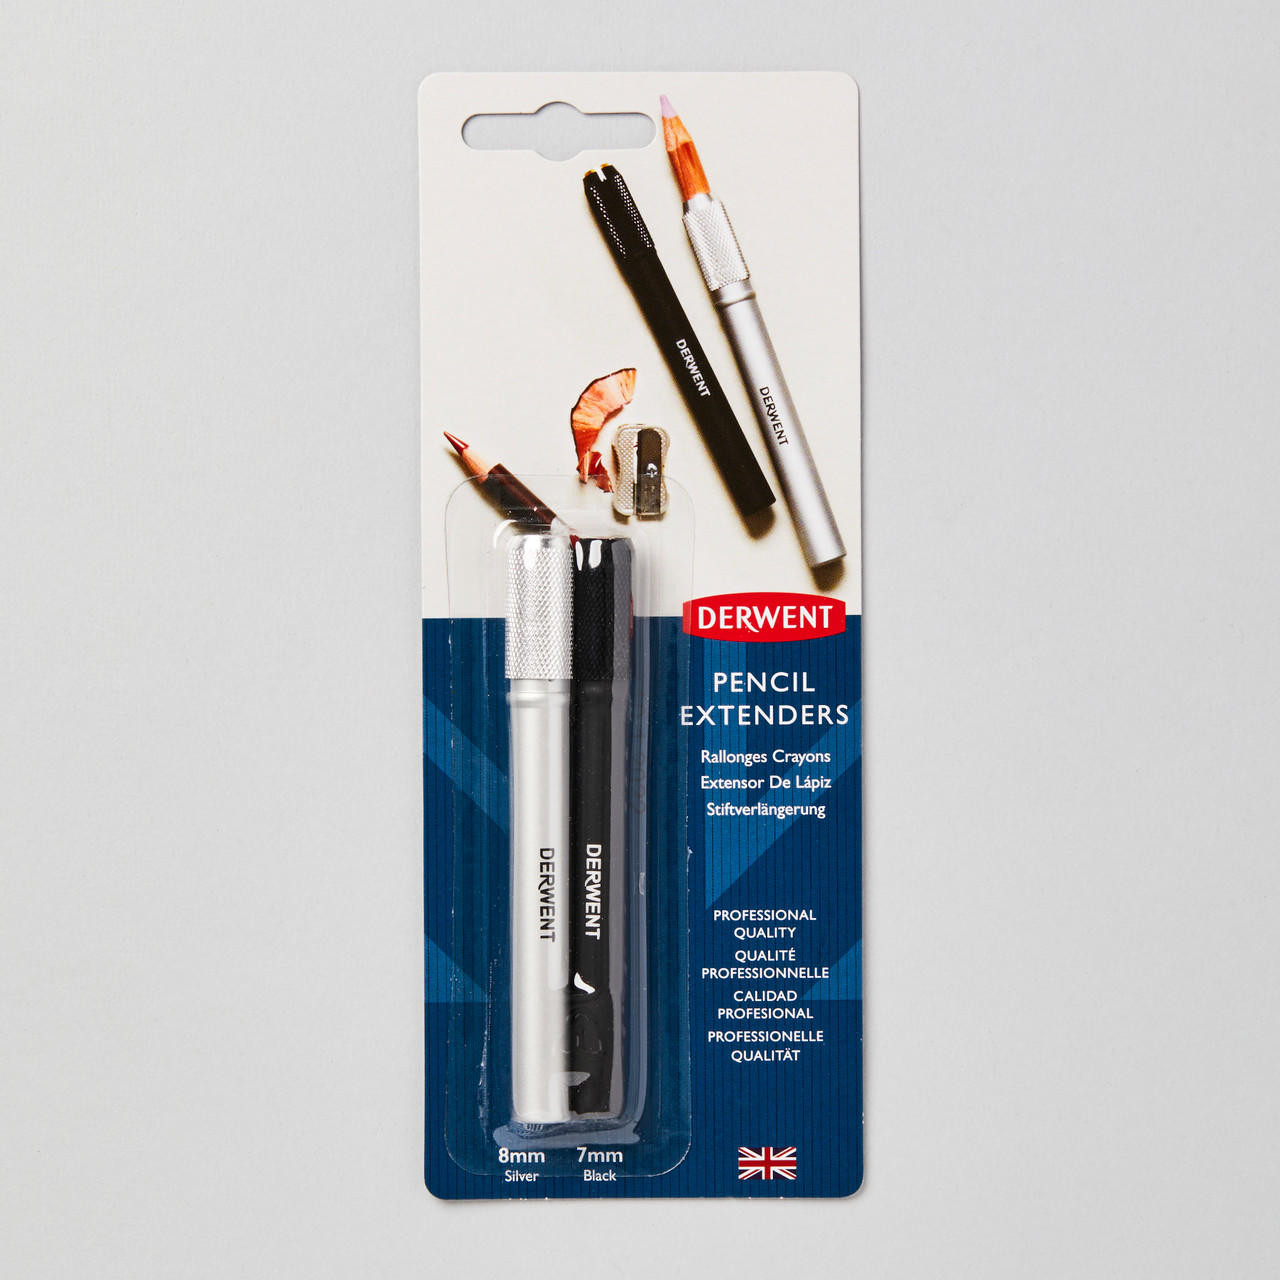 Derwent Pencil Extenders Twin Blister Pack